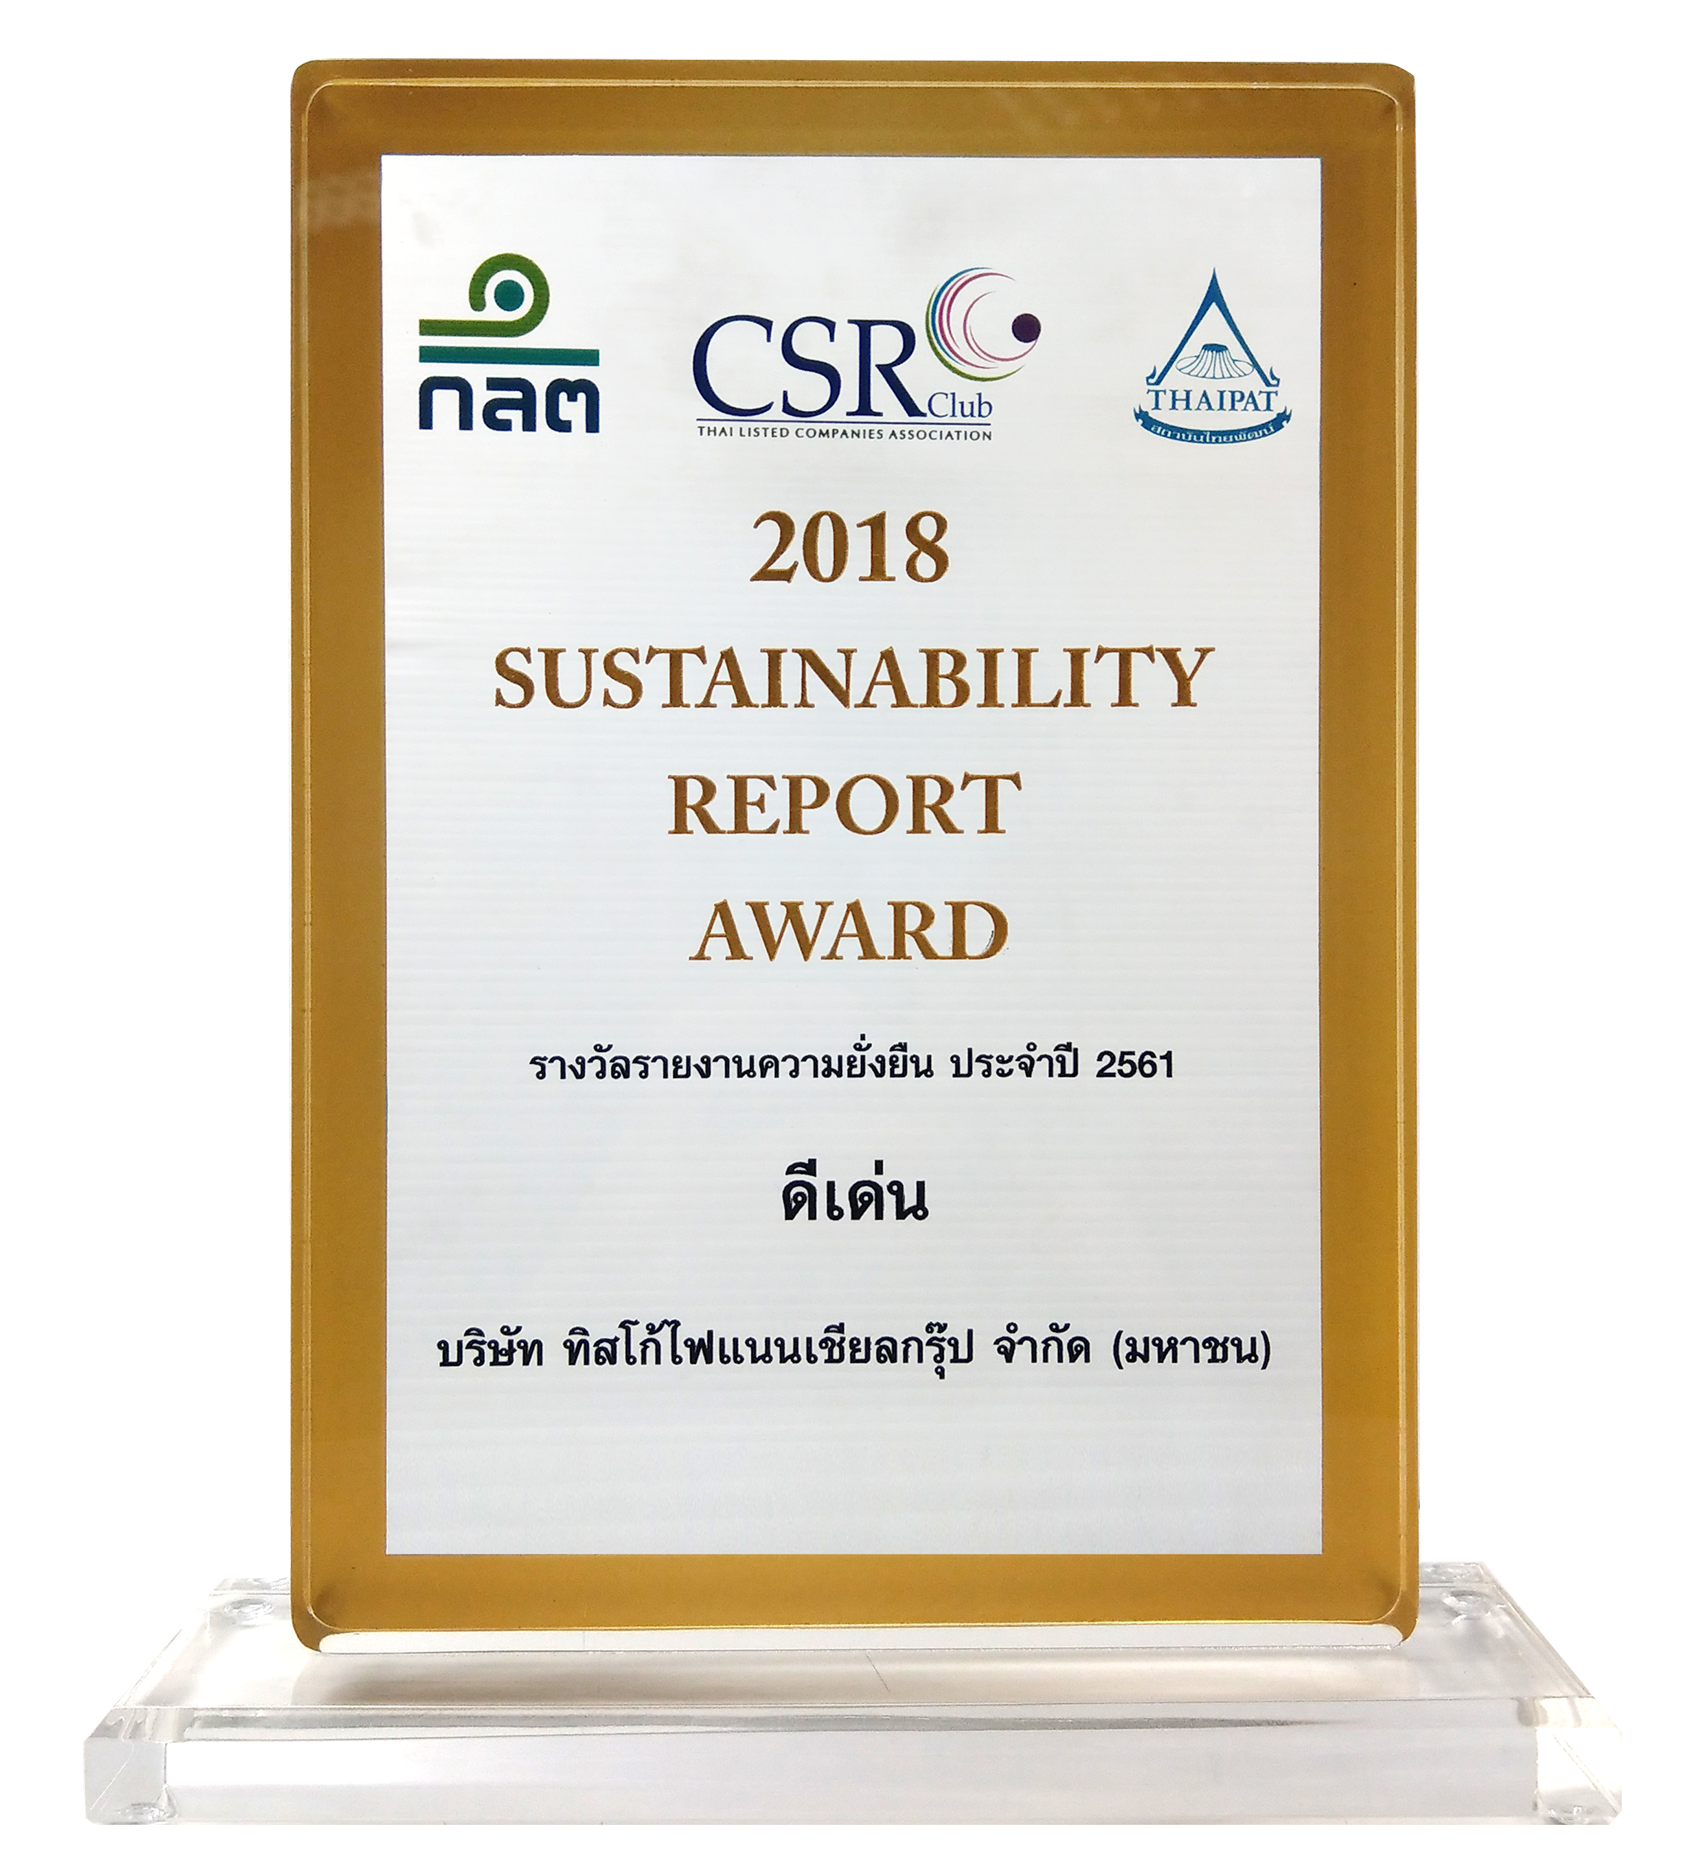 2018 Sustainability Report Awards